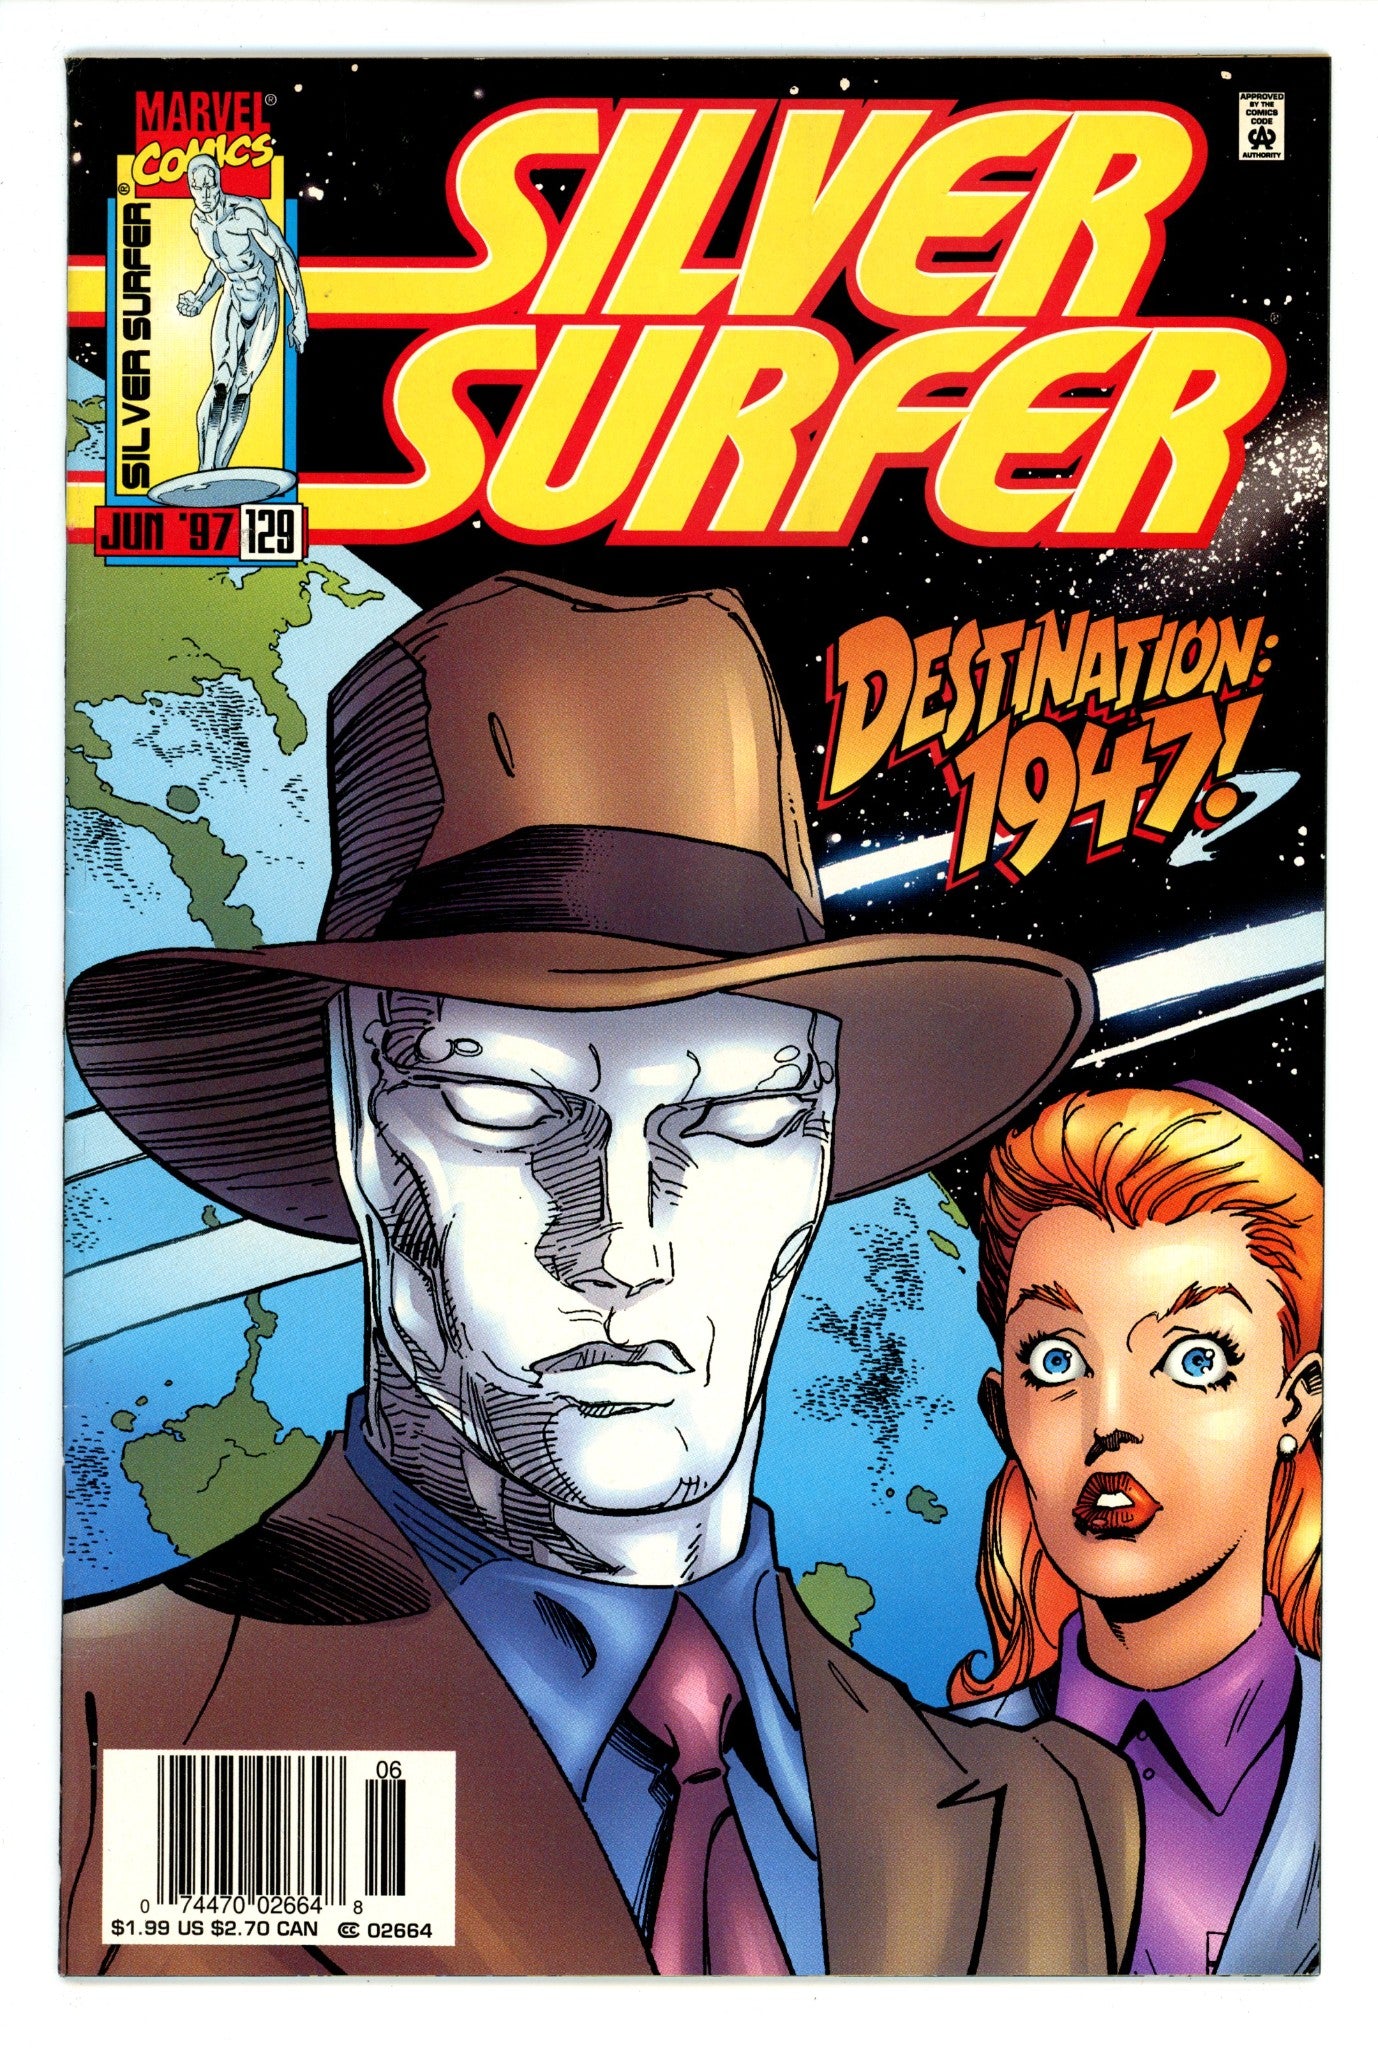 Silver Surfer Vol 3 129 VF (8.0) (1997) Newsstand 